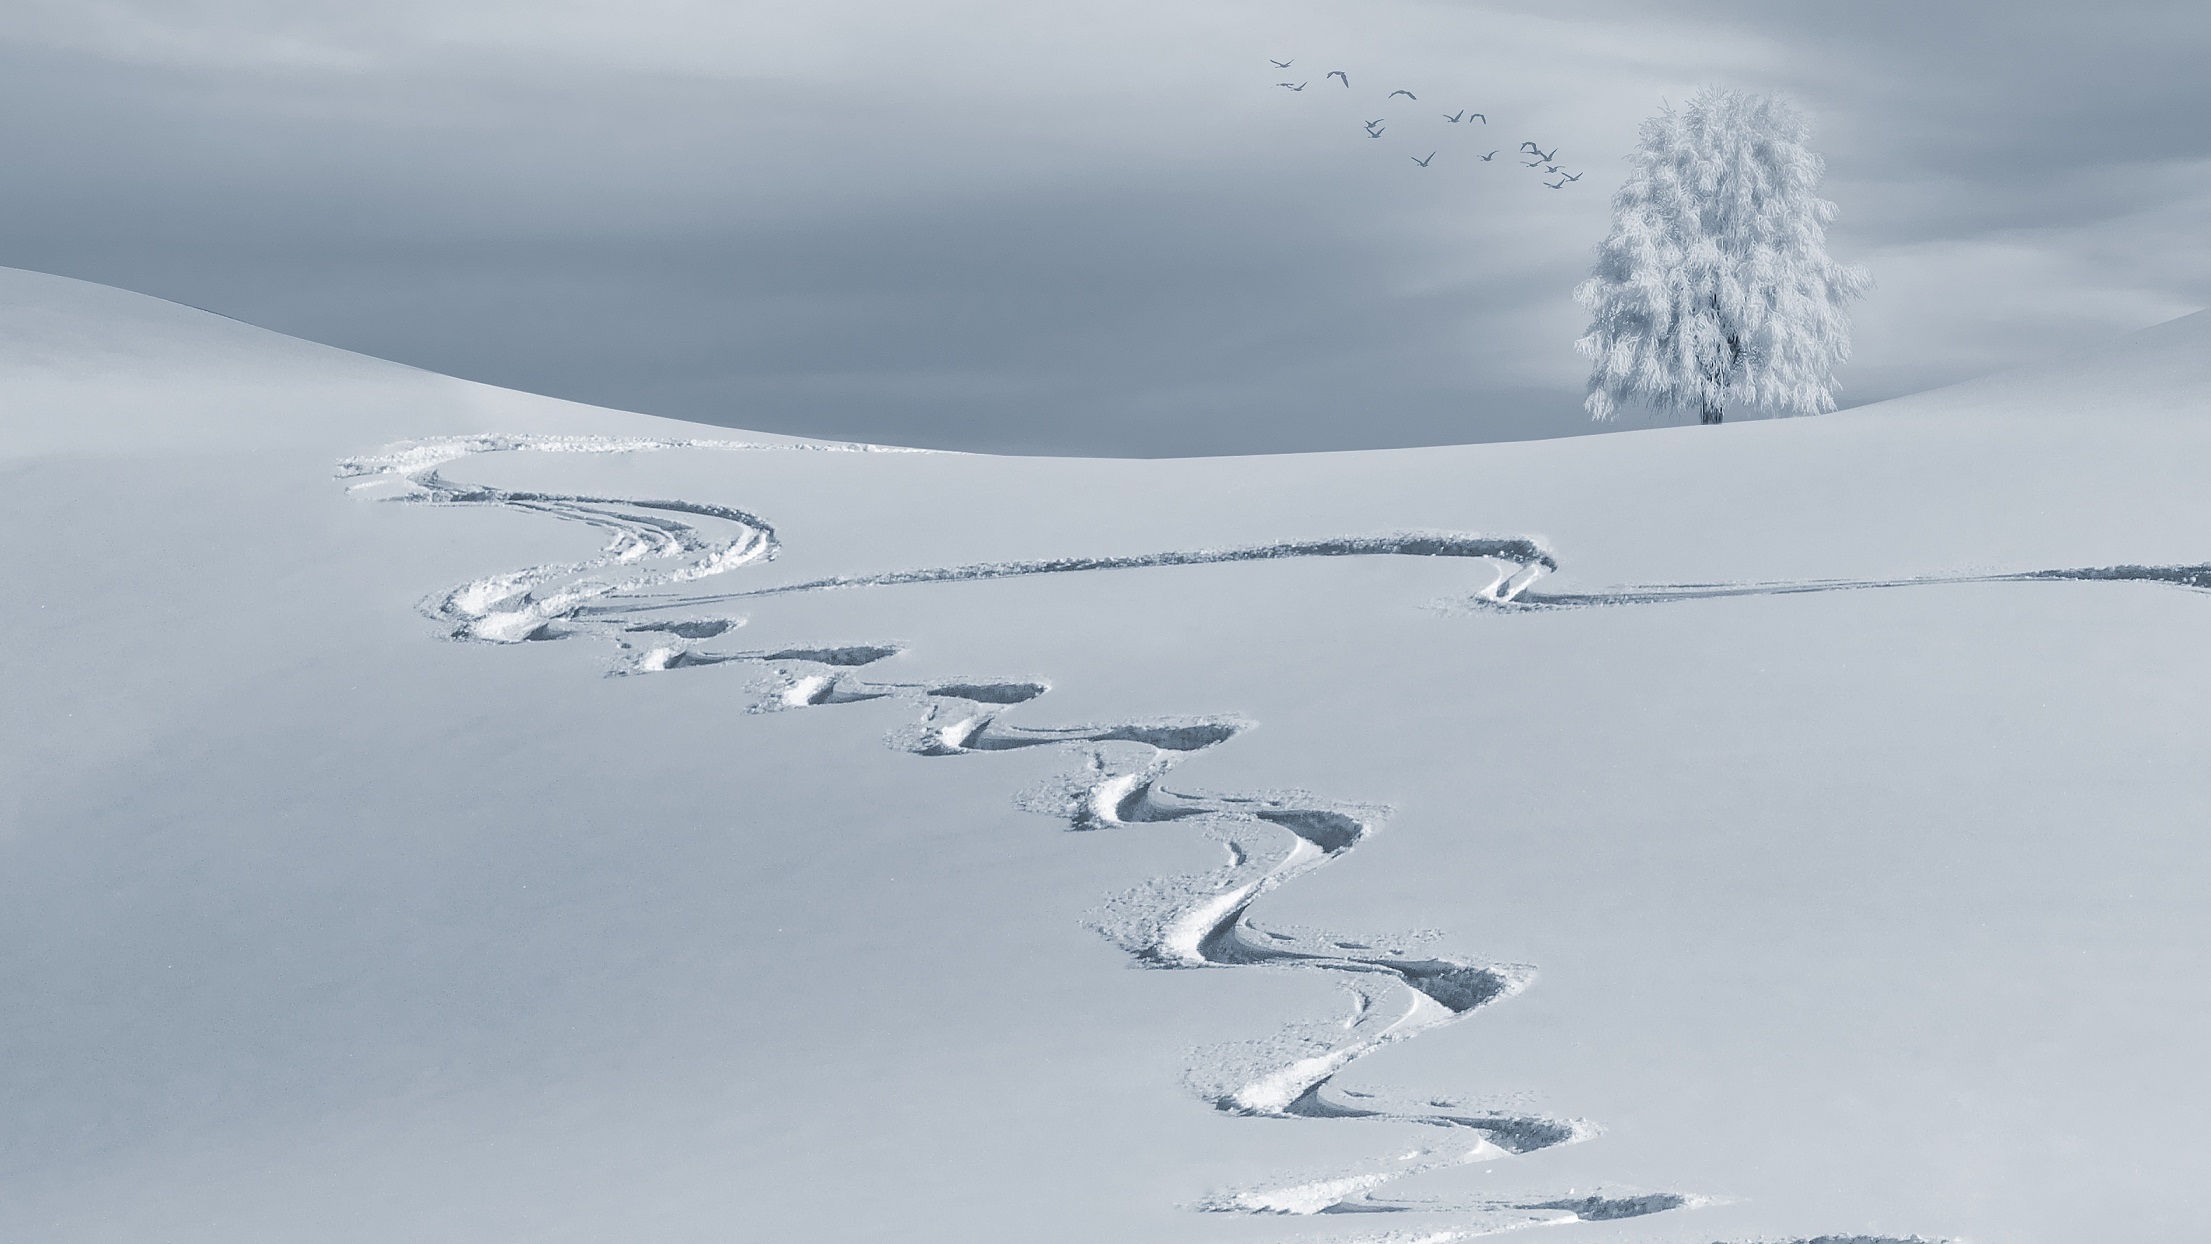 Ski Tracks in the Snow by composita